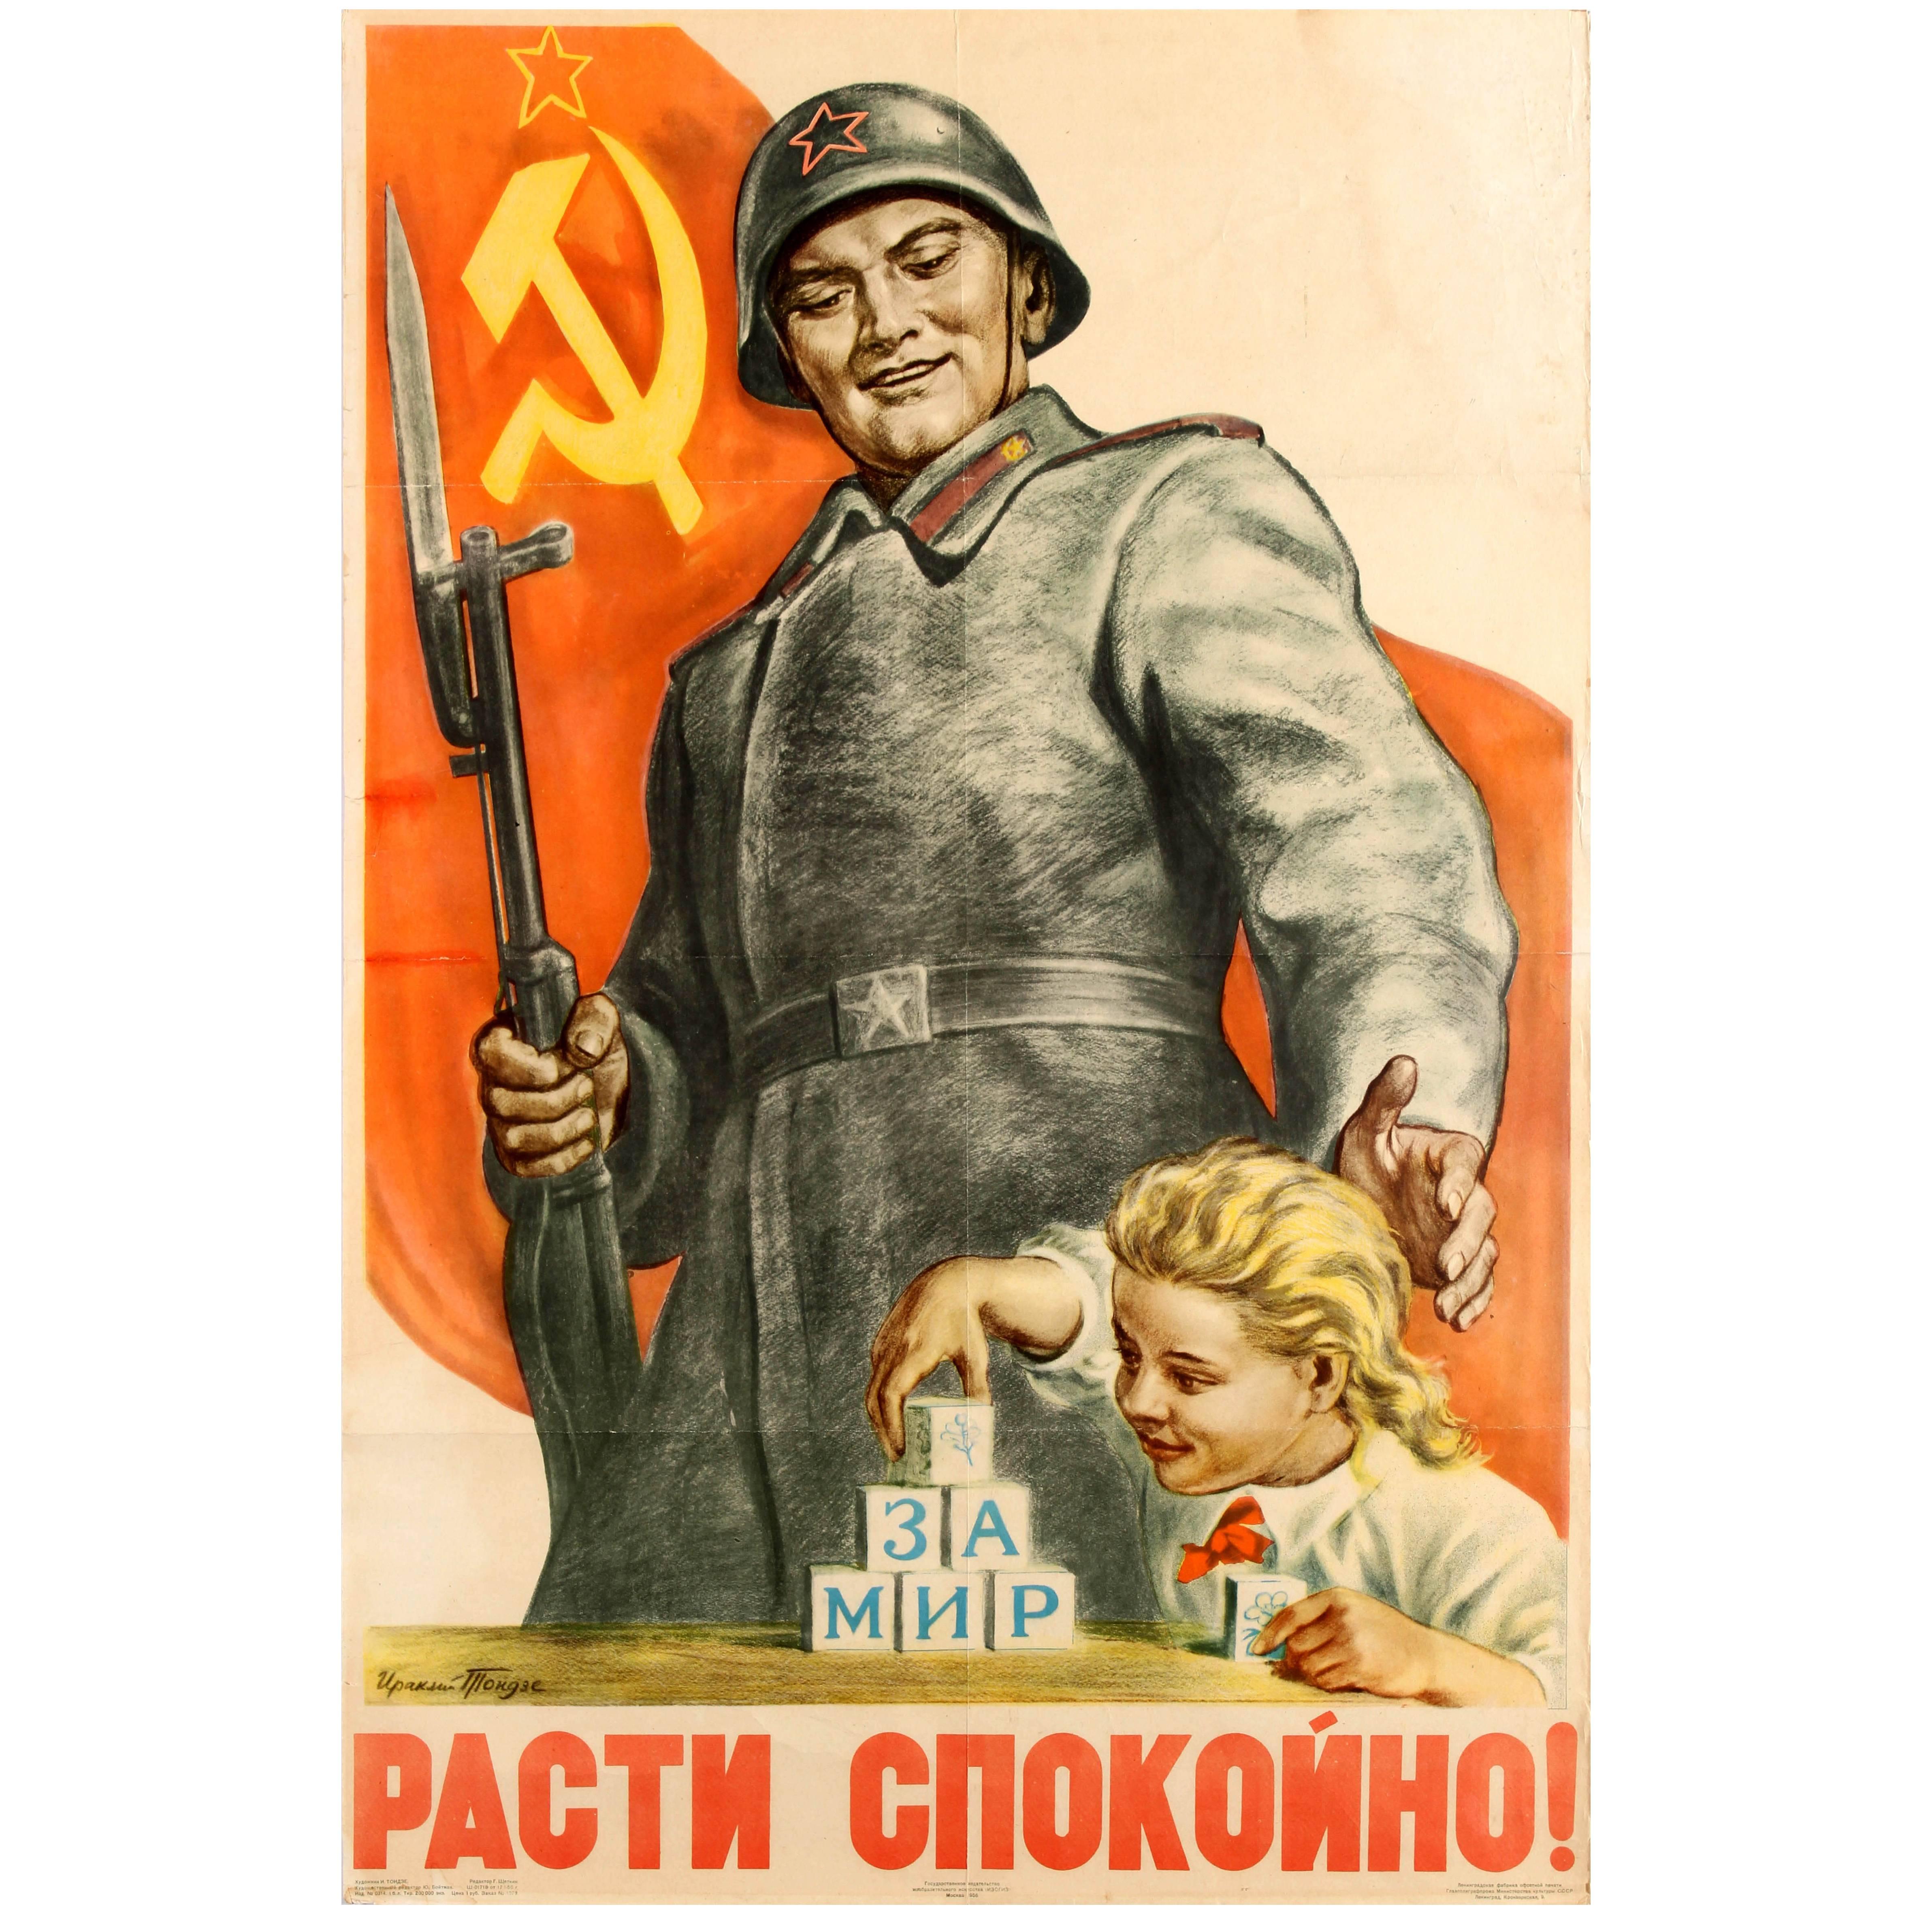 Original Vintage Soviet Propaganda Poster - Grow Up Peacefully! - To Peace